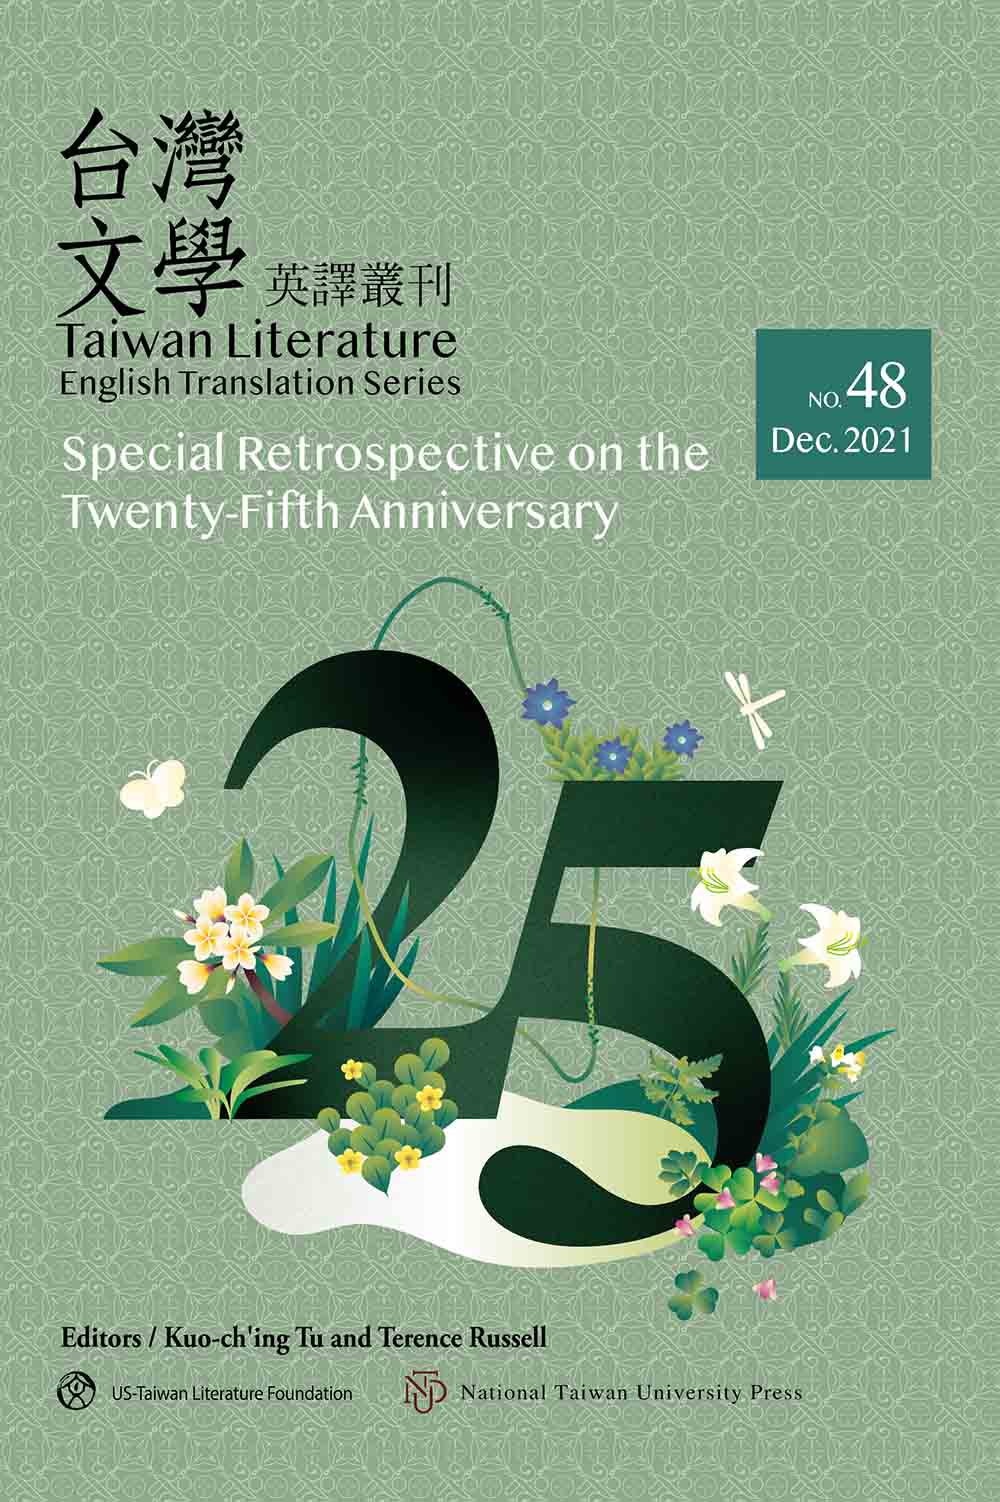 Taiwan Literature: English Translation Series, No. 48 ( Special Retrospective on the Twenty-Fifth Anniversary of Taiwan Literature: English Translation Series)